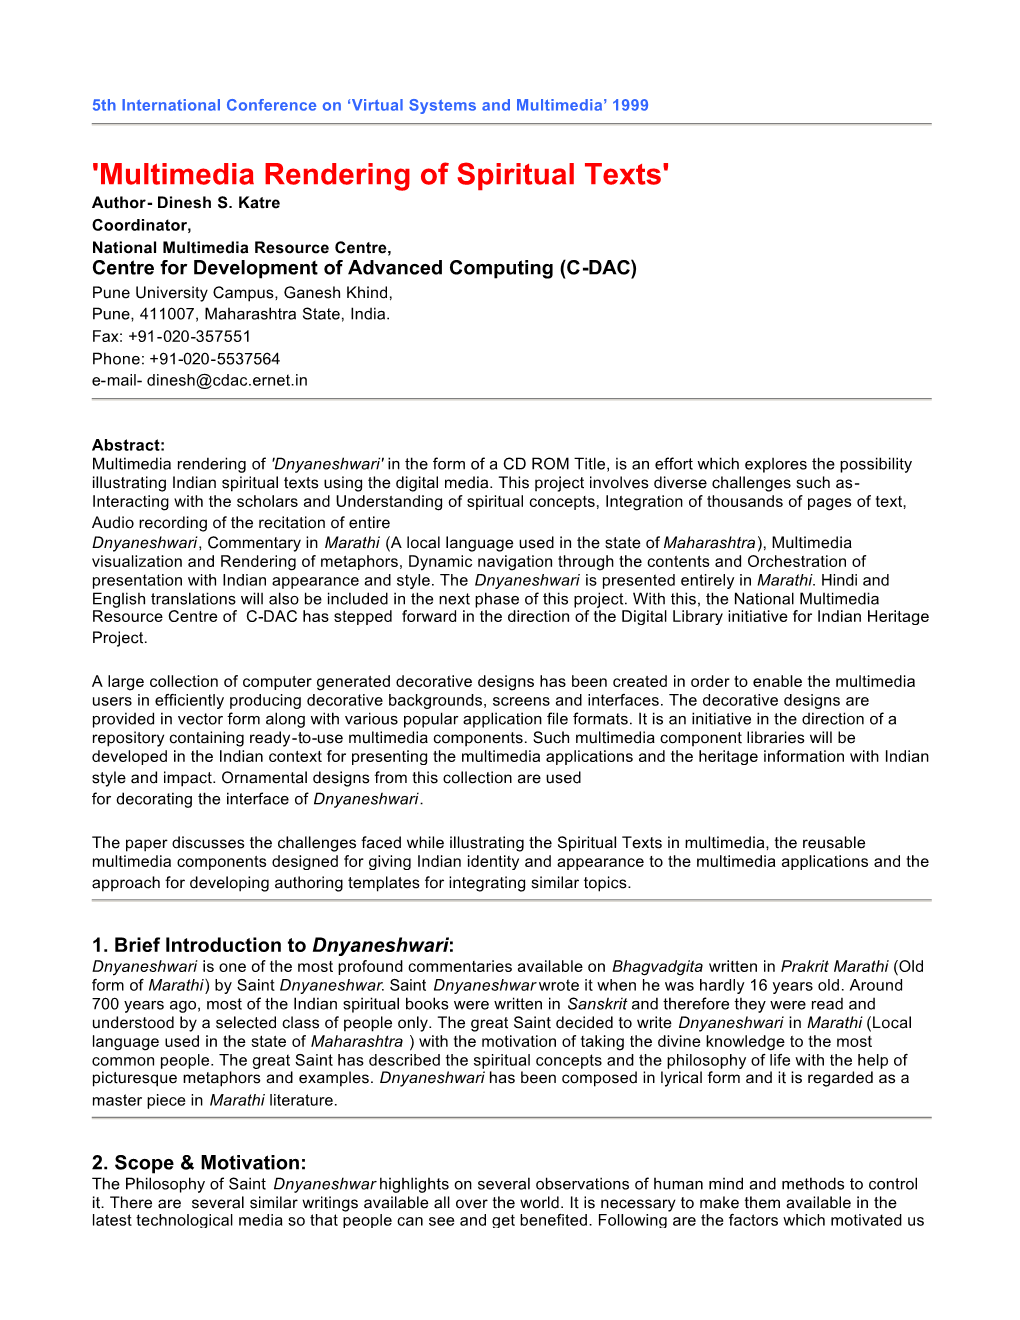 Multimedia Rendering of Spiritual Texts' Author- Dinesh S